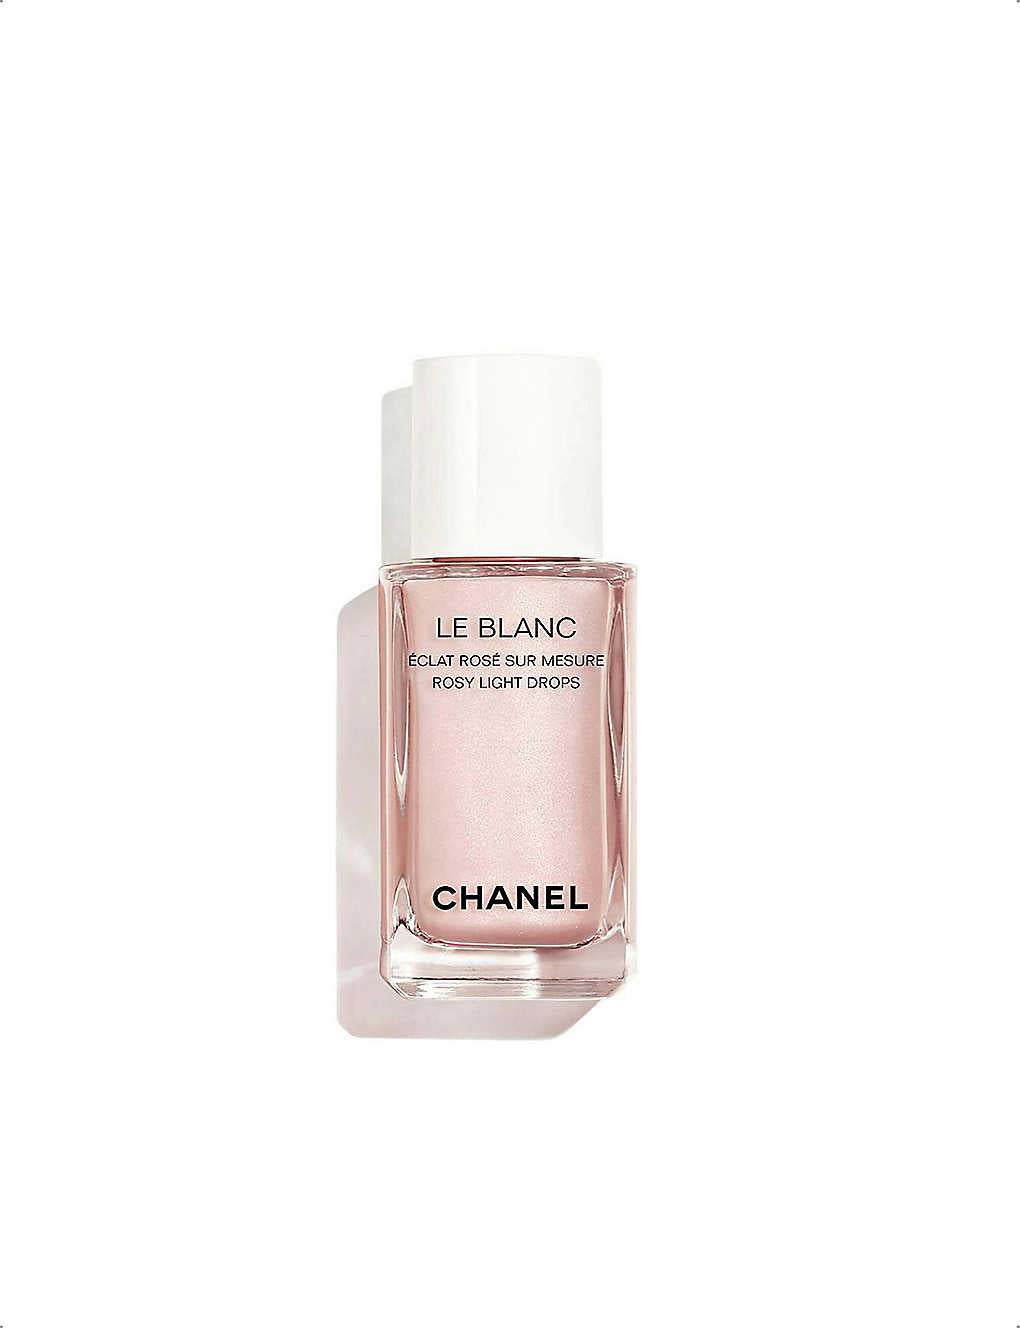 Chanel Le Blanc Oil-in-Cream Compact Foundation